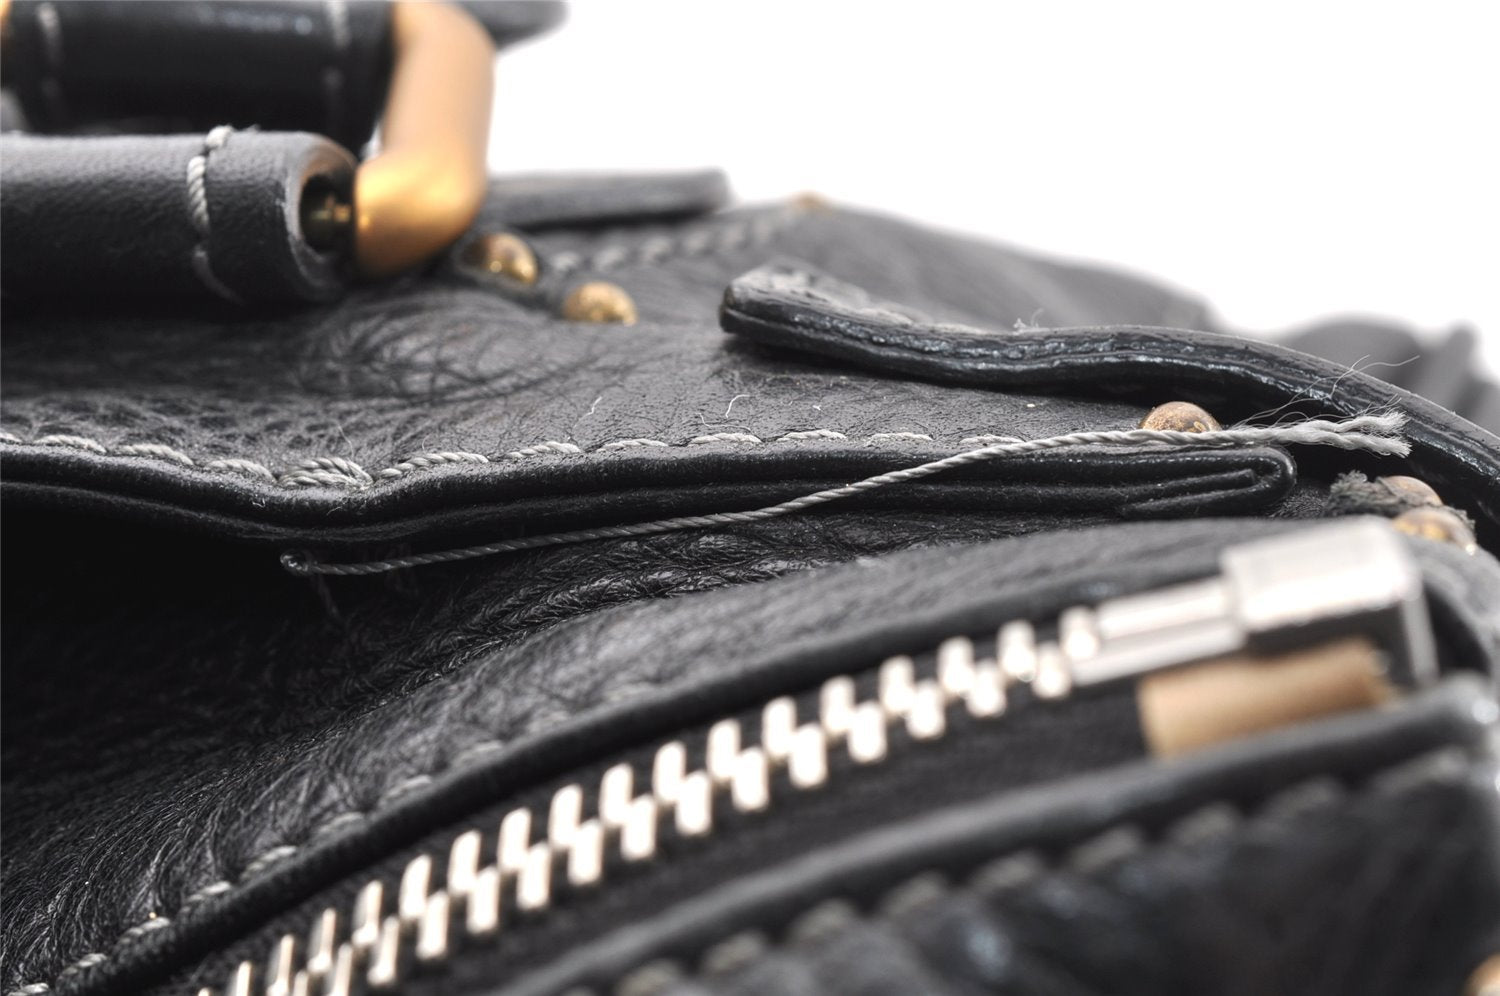 Authentic Chloe Vintage Paddington Leather Shoulder Hand Bag Black 5045I